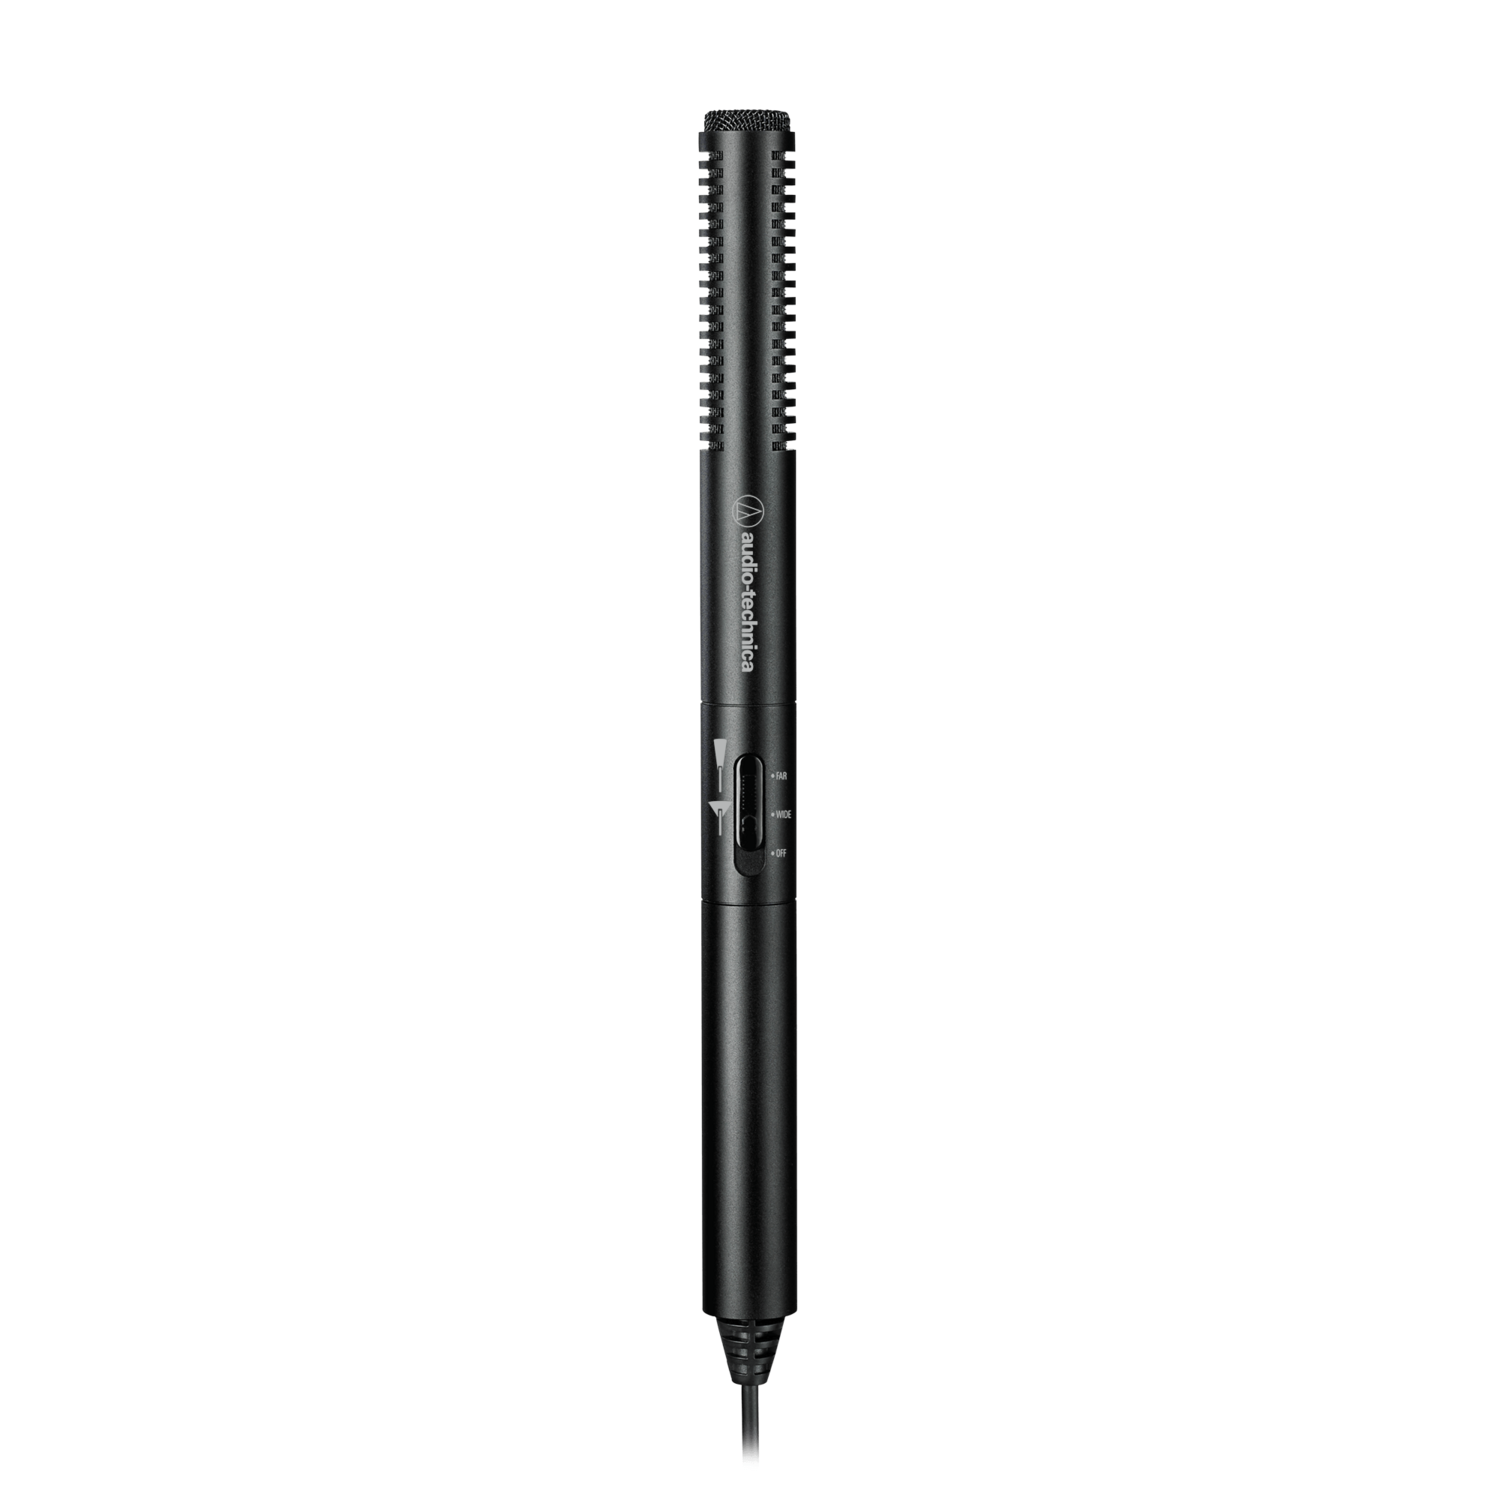 Audio Technica Condenser Shotgun Microphone
ATR6550x